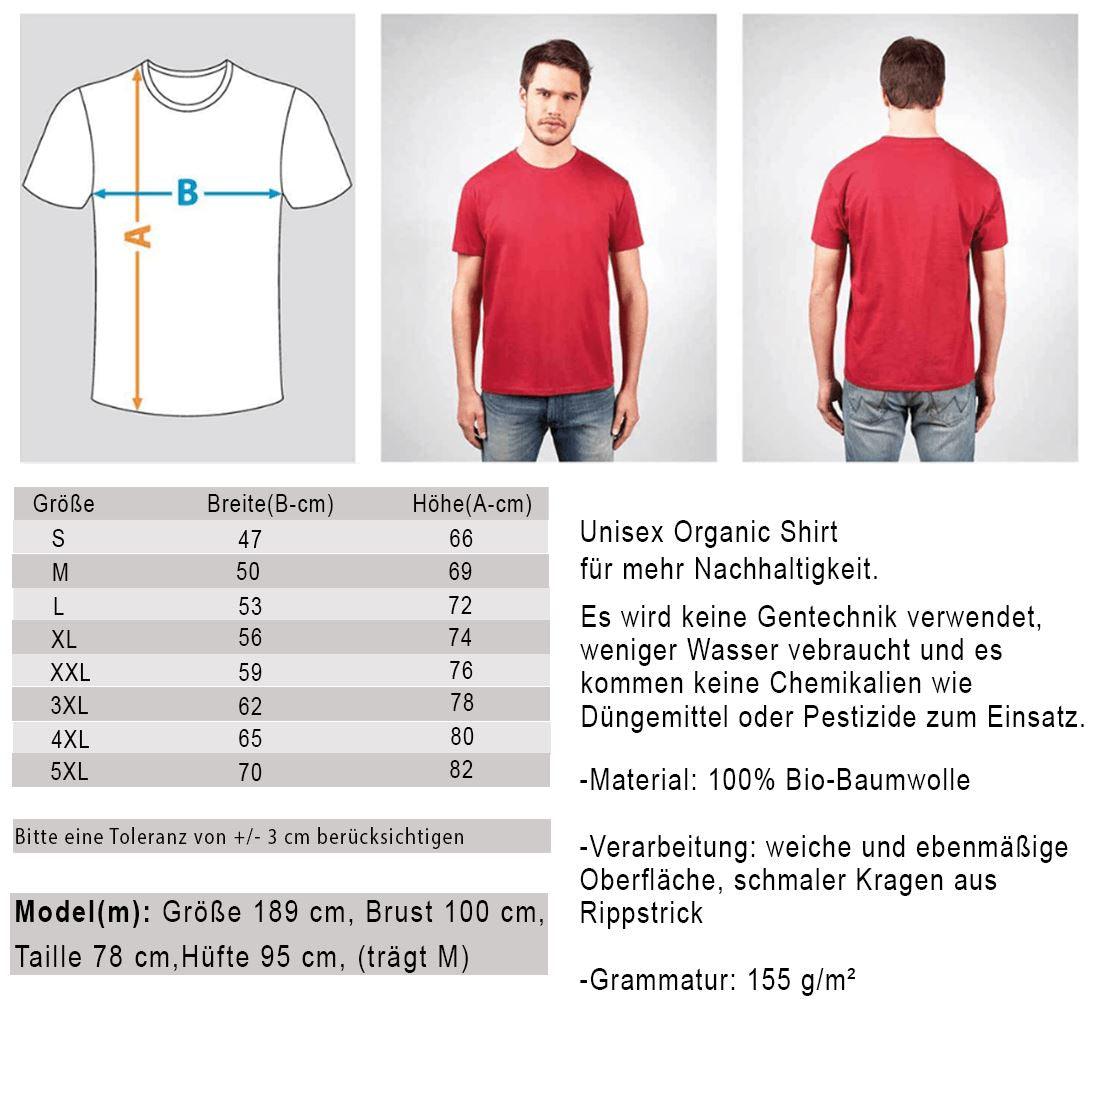 Too cute [Herr Tierfreund] - Unisex Organic Shirt Shirtee 